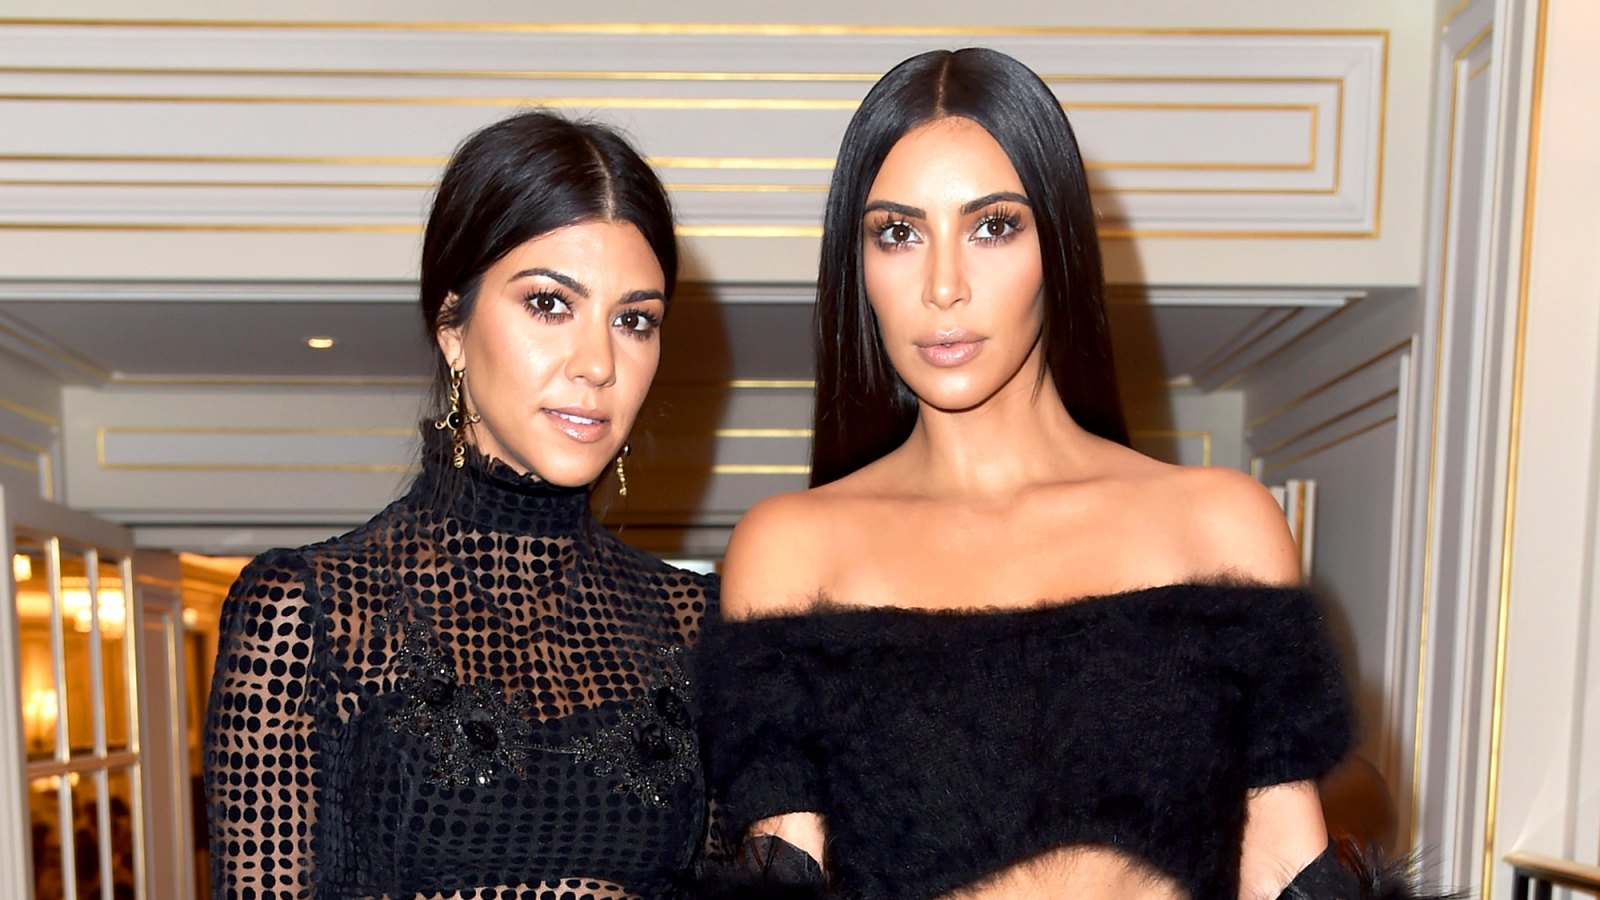 Kourtney Kardashian and Kim Kardashian attend Buro 24/7 Fashion Forward Initiative as part of Paris Fashion Week Womenswear Spring/Summer 2016 at Hotel Ritz in Paris, France.